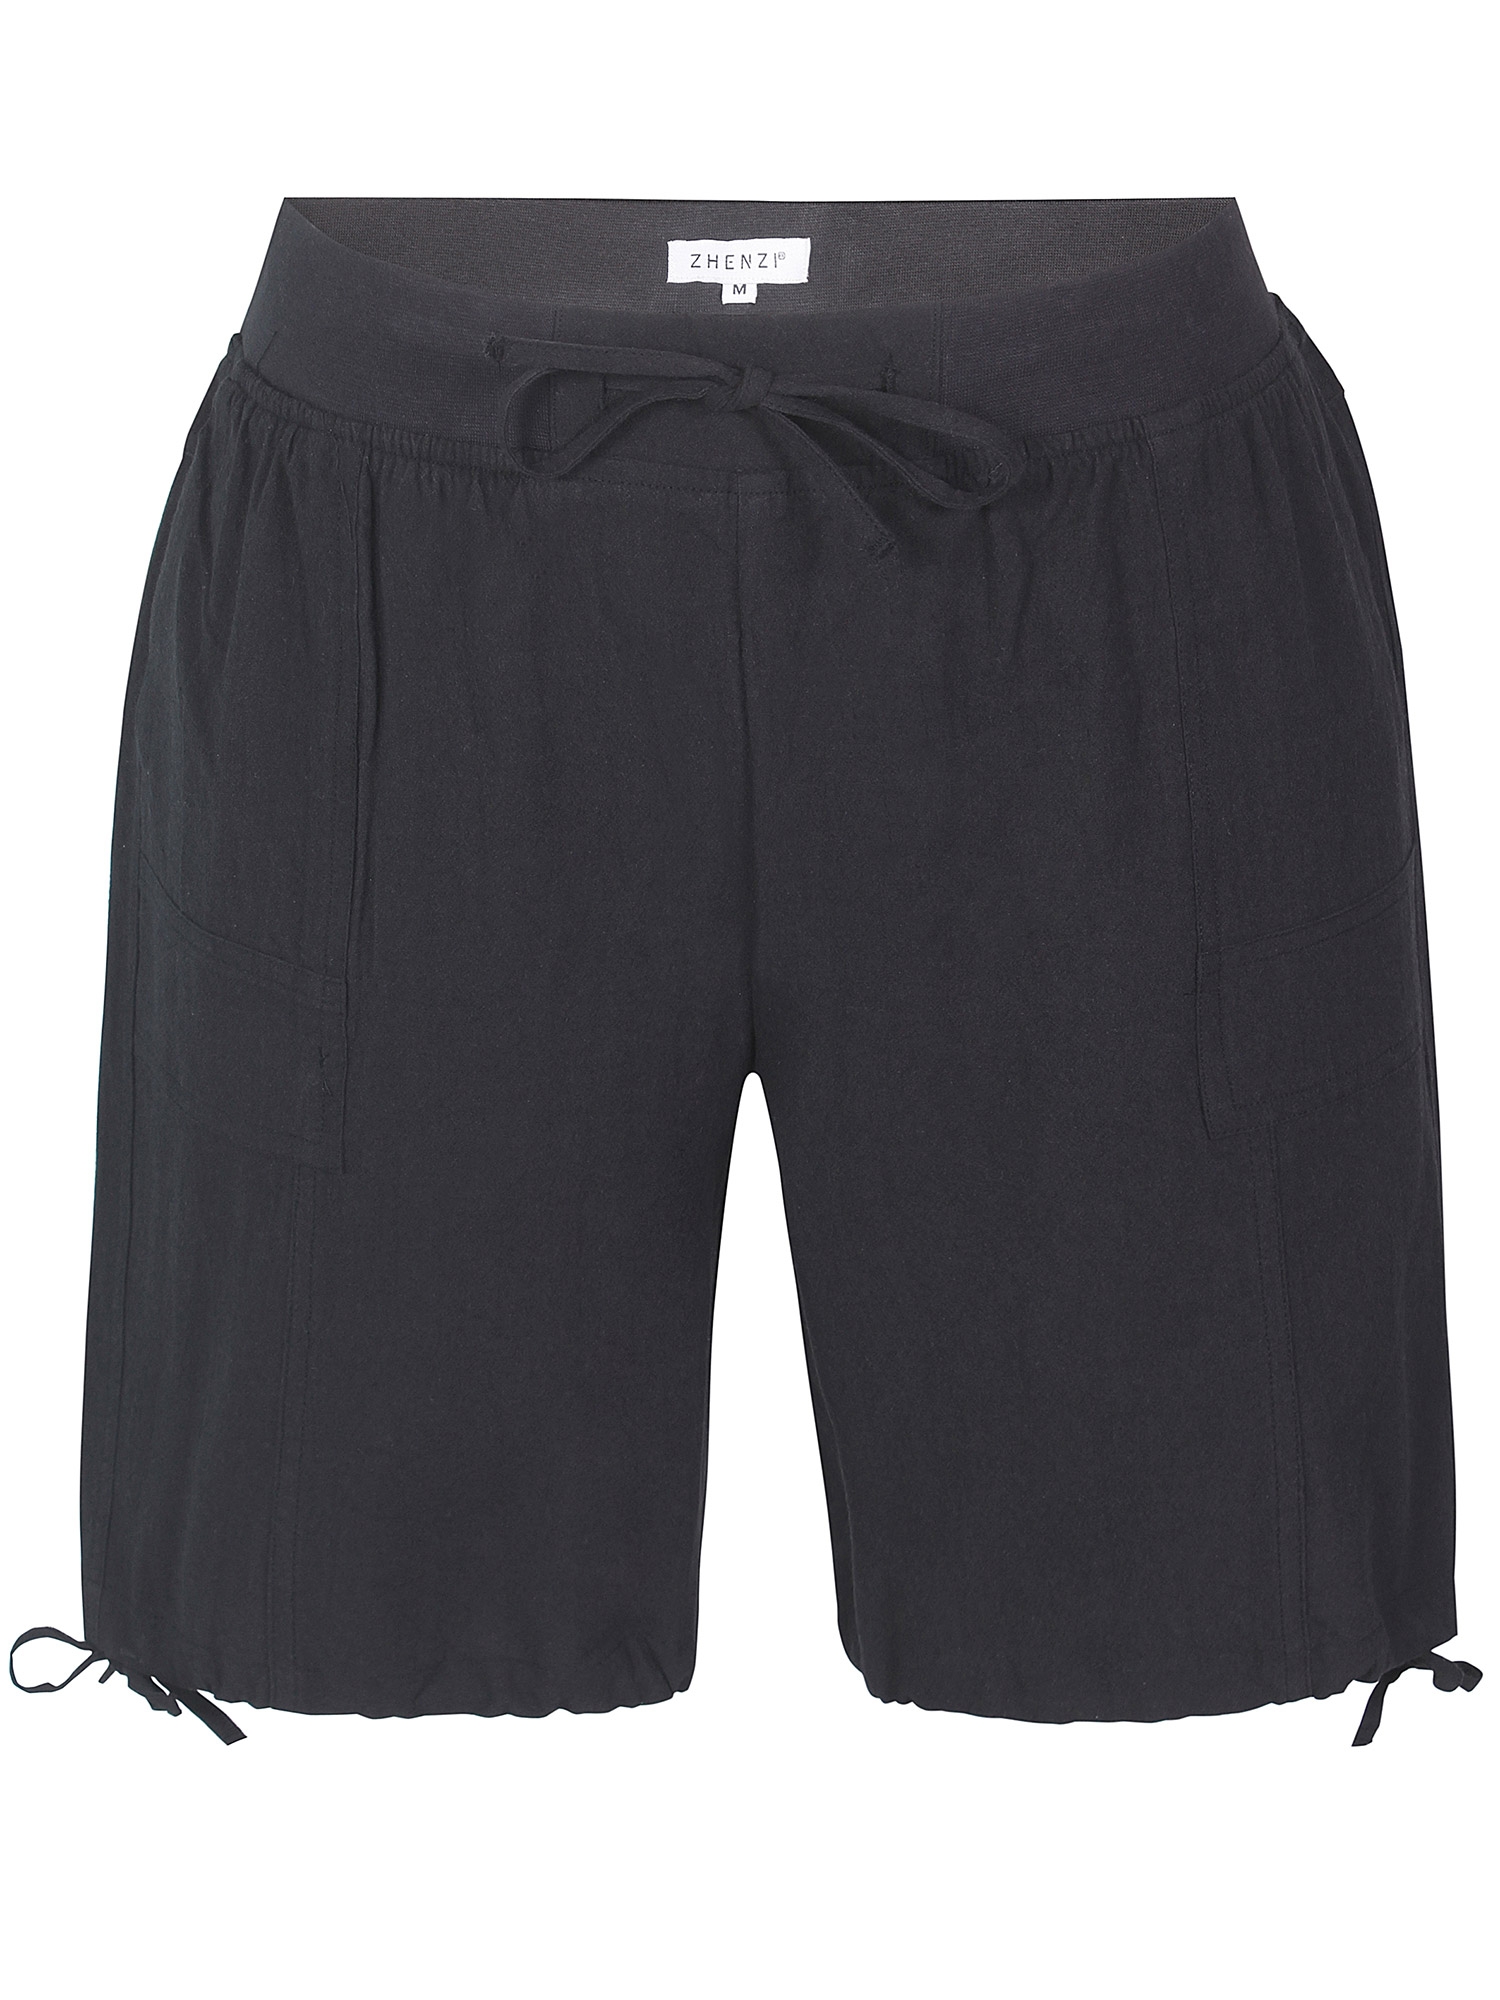 Amin - Lækre sorte bomulds shorts fra Zhenzi